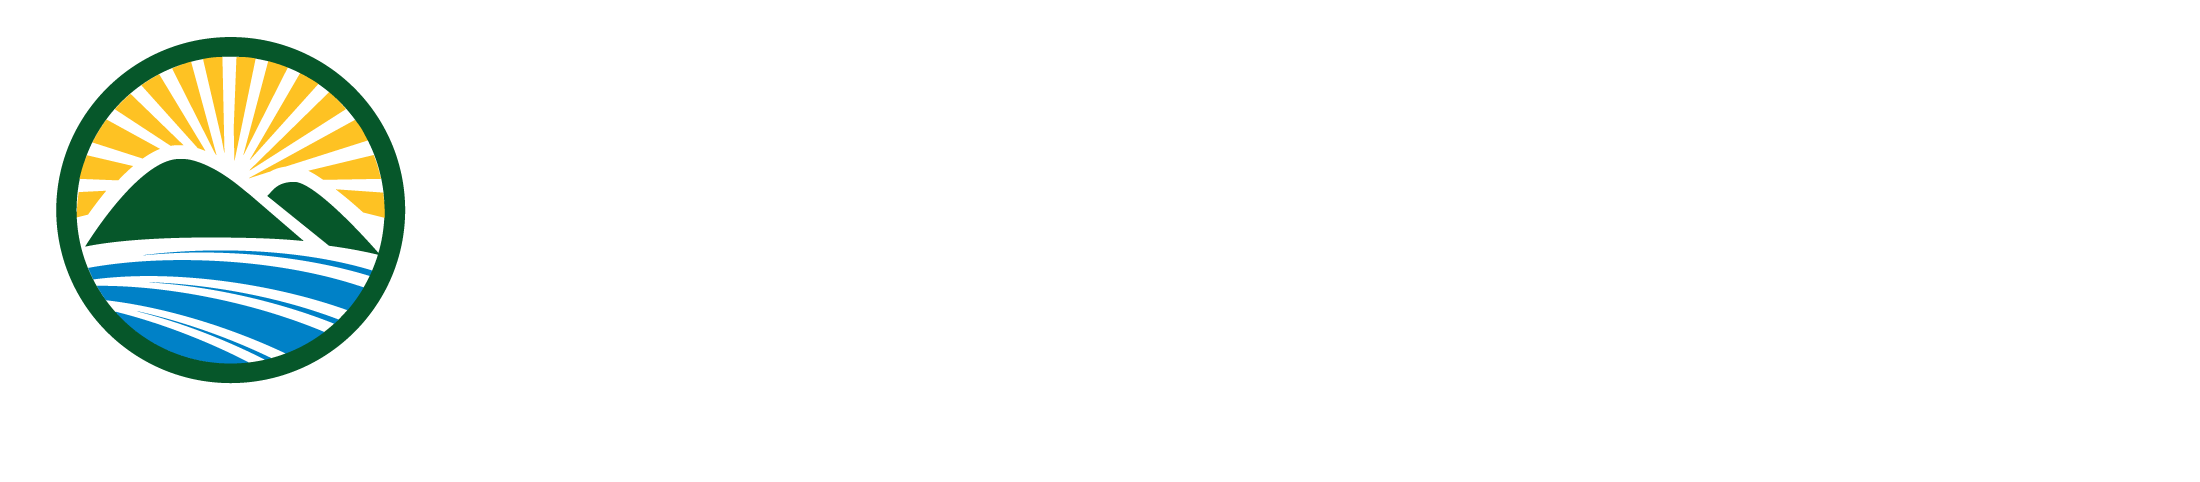 SSFoundation-logo-invert